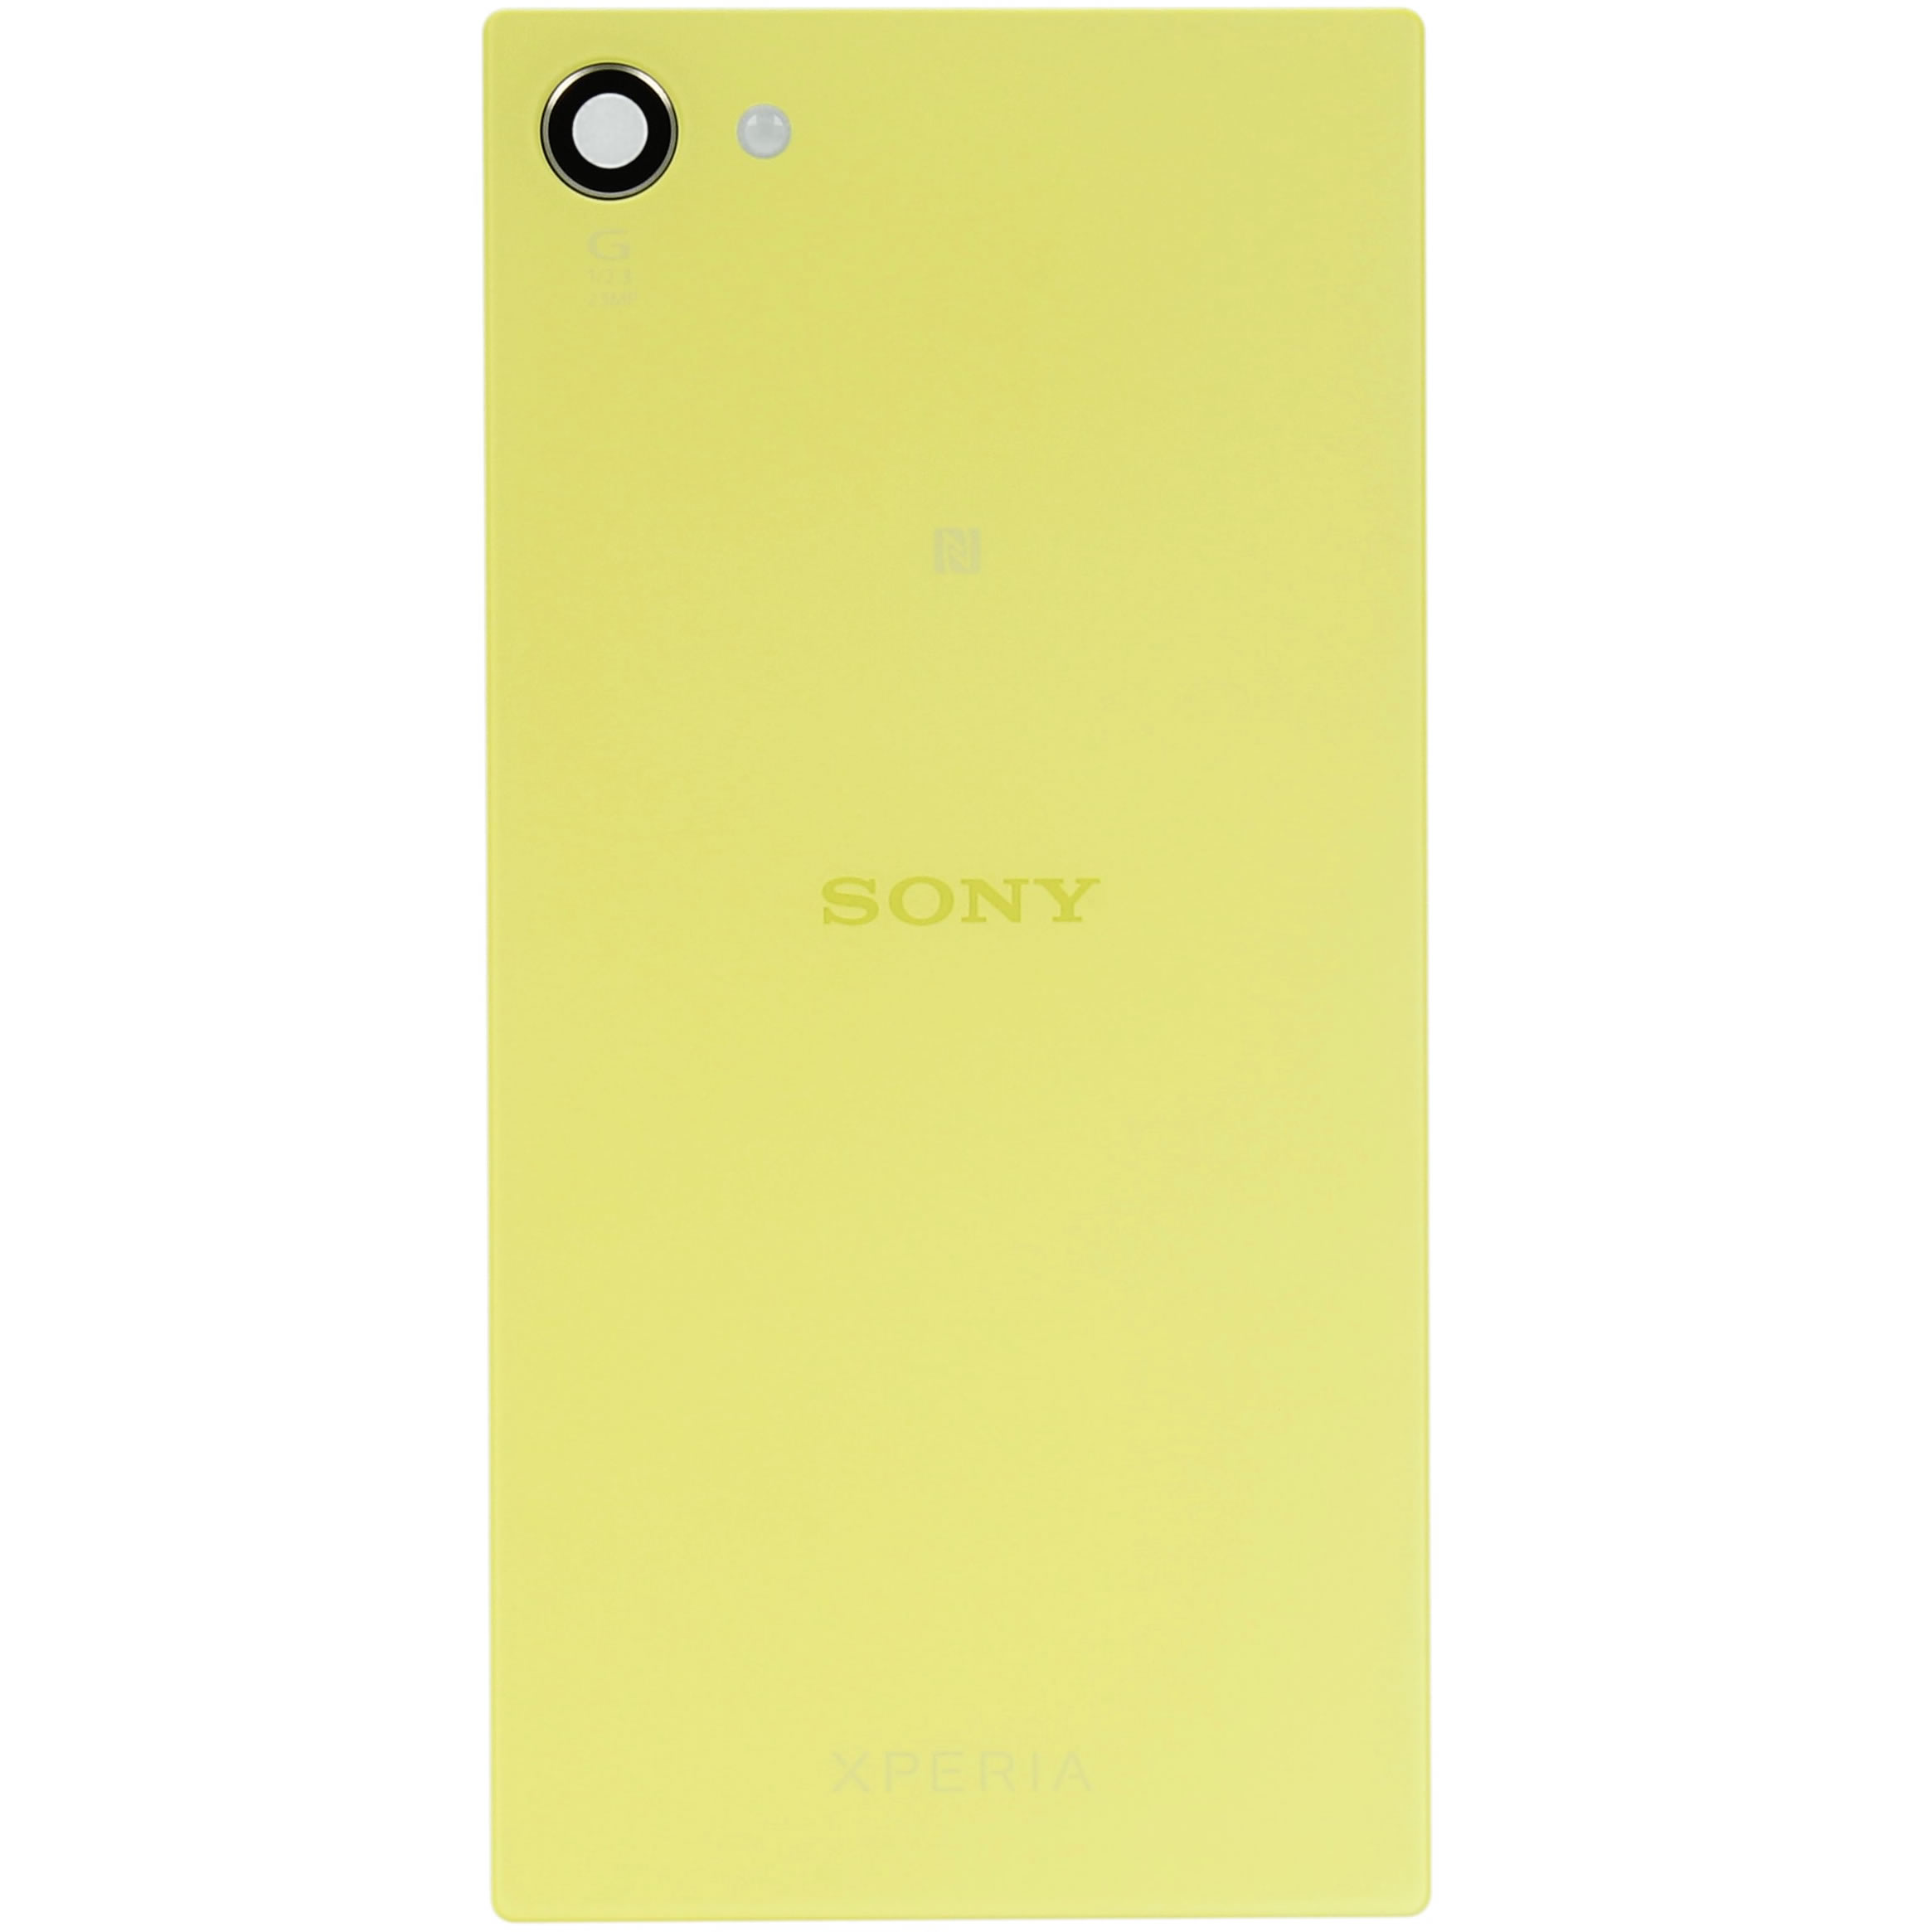 Sony Xperia Z5 Compact (E5803/E5823) Backcover 1295-4898 Yellow